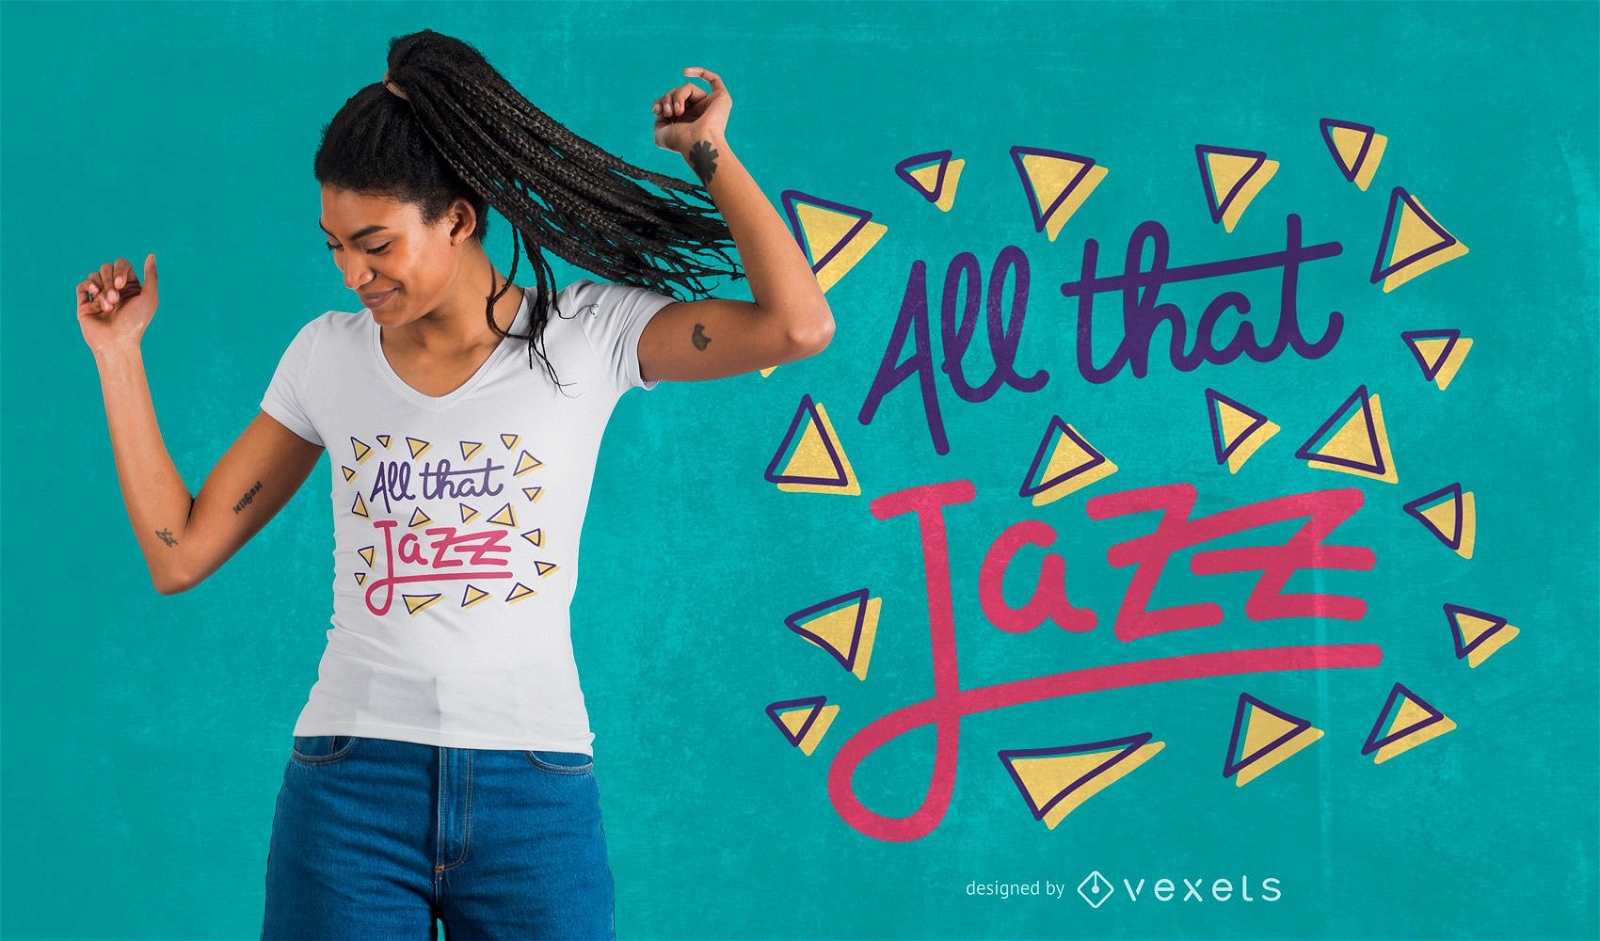 All that jazz t-shirt design